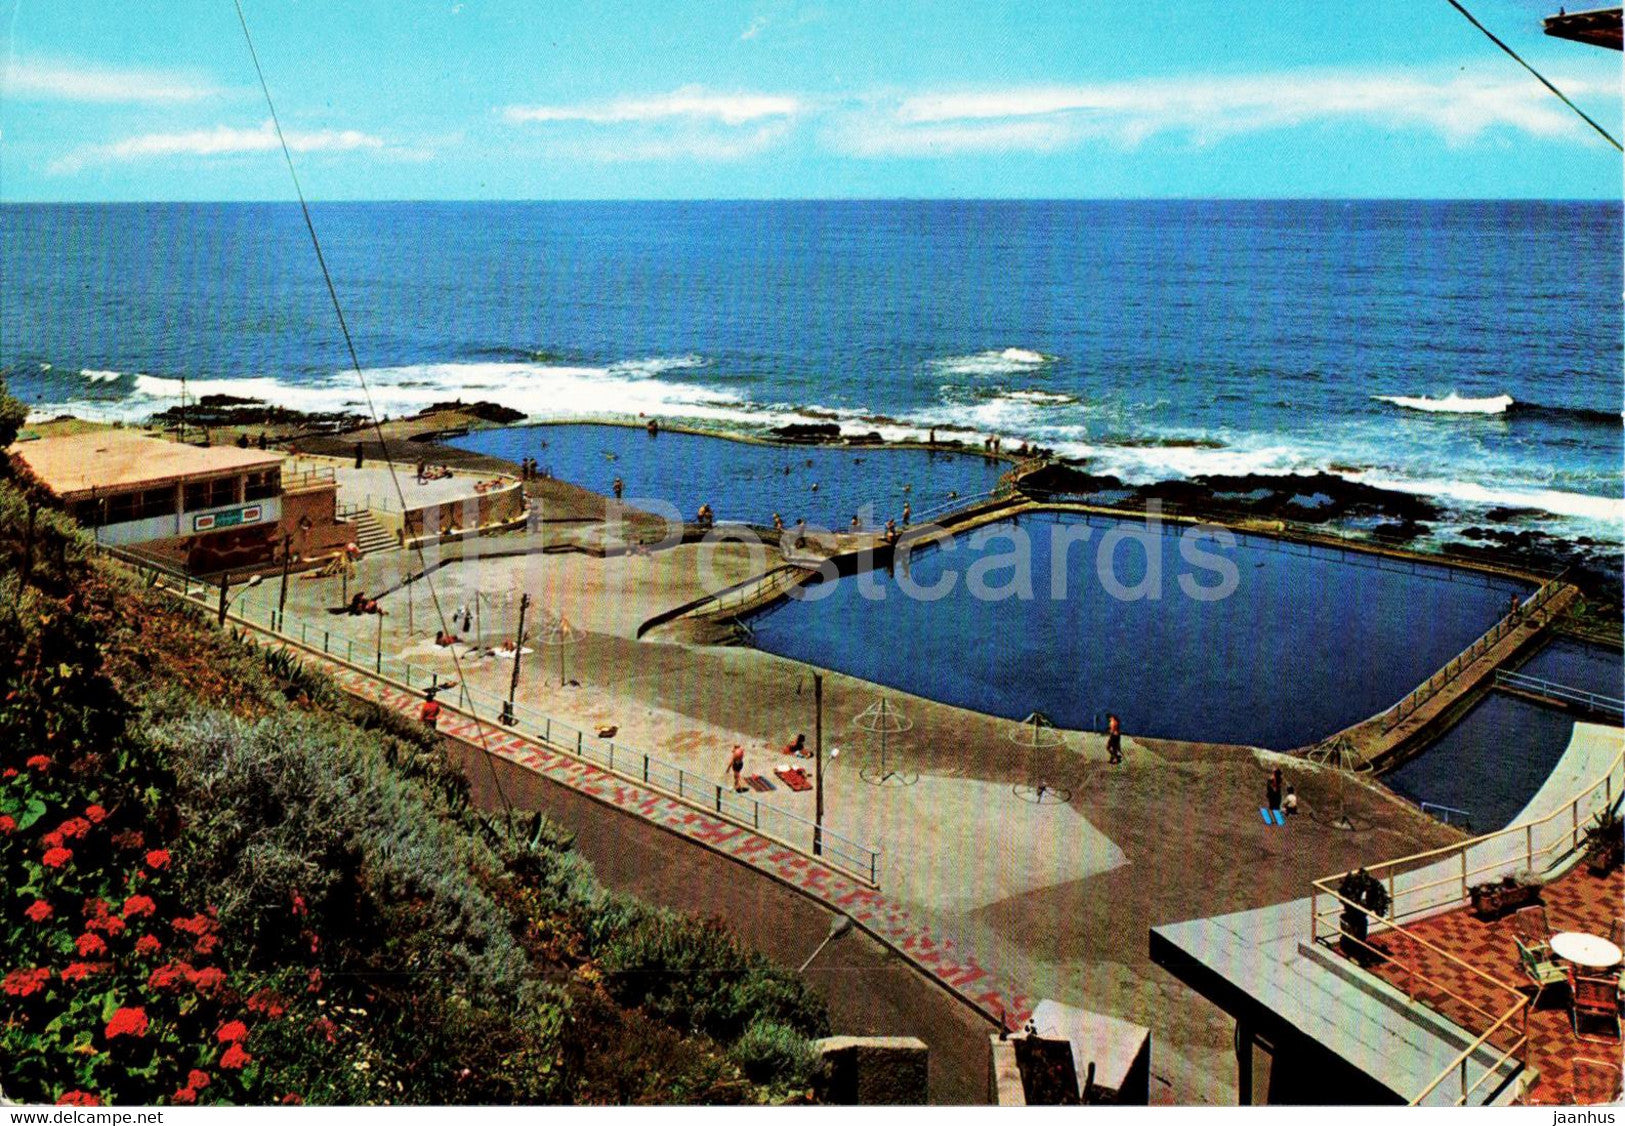 Bajamar - Tenerife - Gran Canaria - 2522 - Spain - unused - JH Postcards